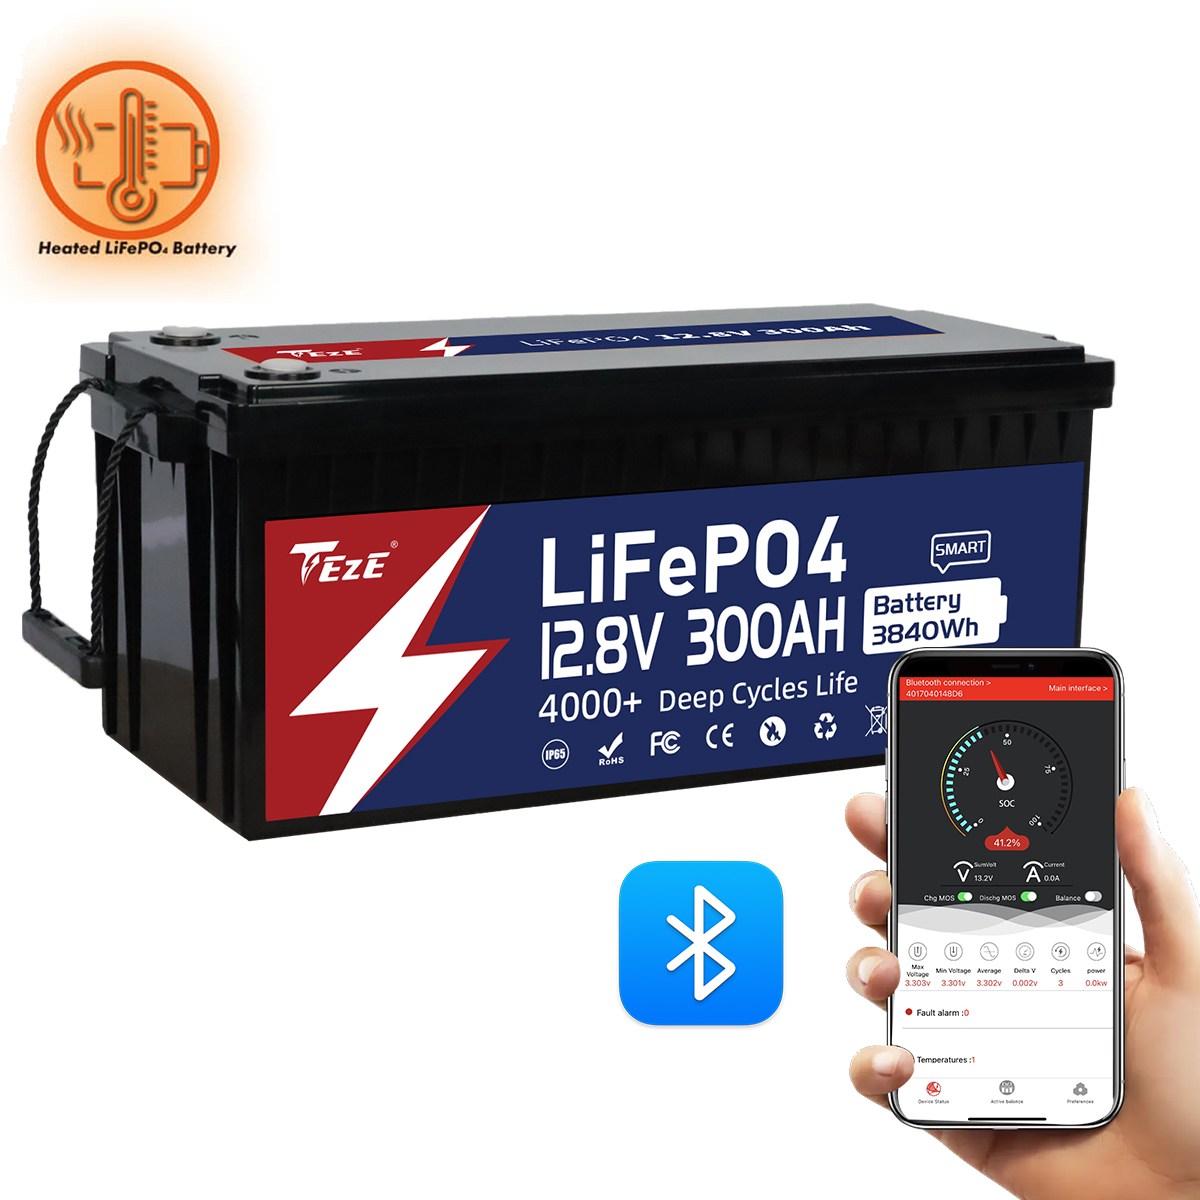 https://img-va.myshopline.com/image/store/1665806659085/12V-300Ah-tezepower-lithium-lifepo4-batterie-self-heating.jpeg?w=1200&h=1200